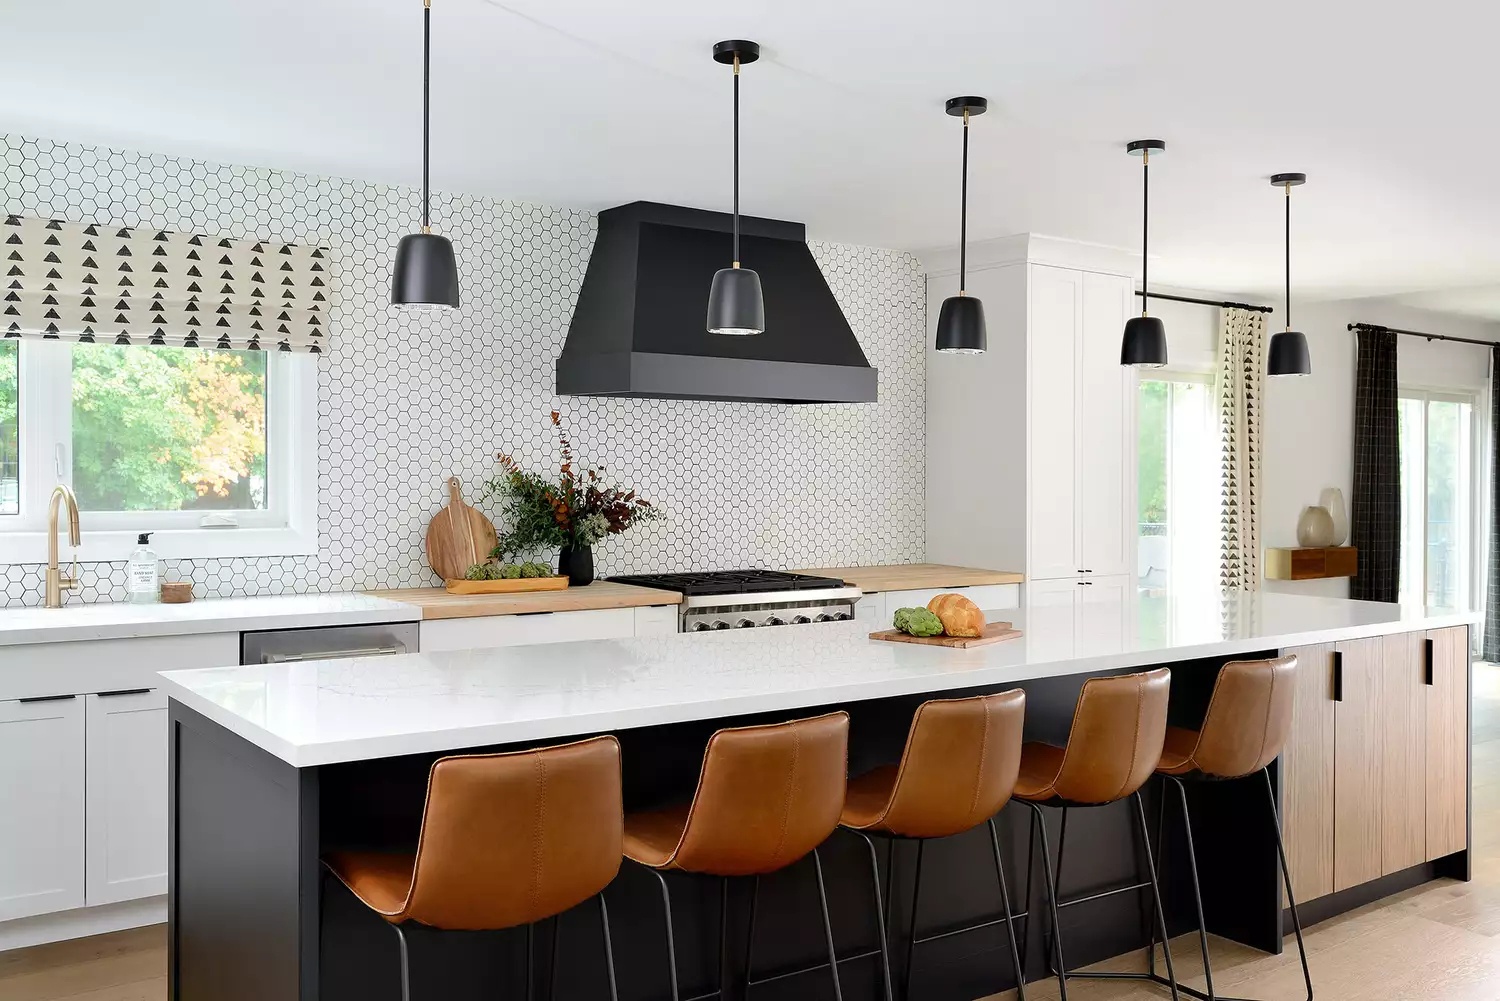 https://visualhunt.com/photos/23/open-plan-black-white-kitchen-cognac-leather-bar-stools-tiled-backsplash-black-island-range-hood.jpeg